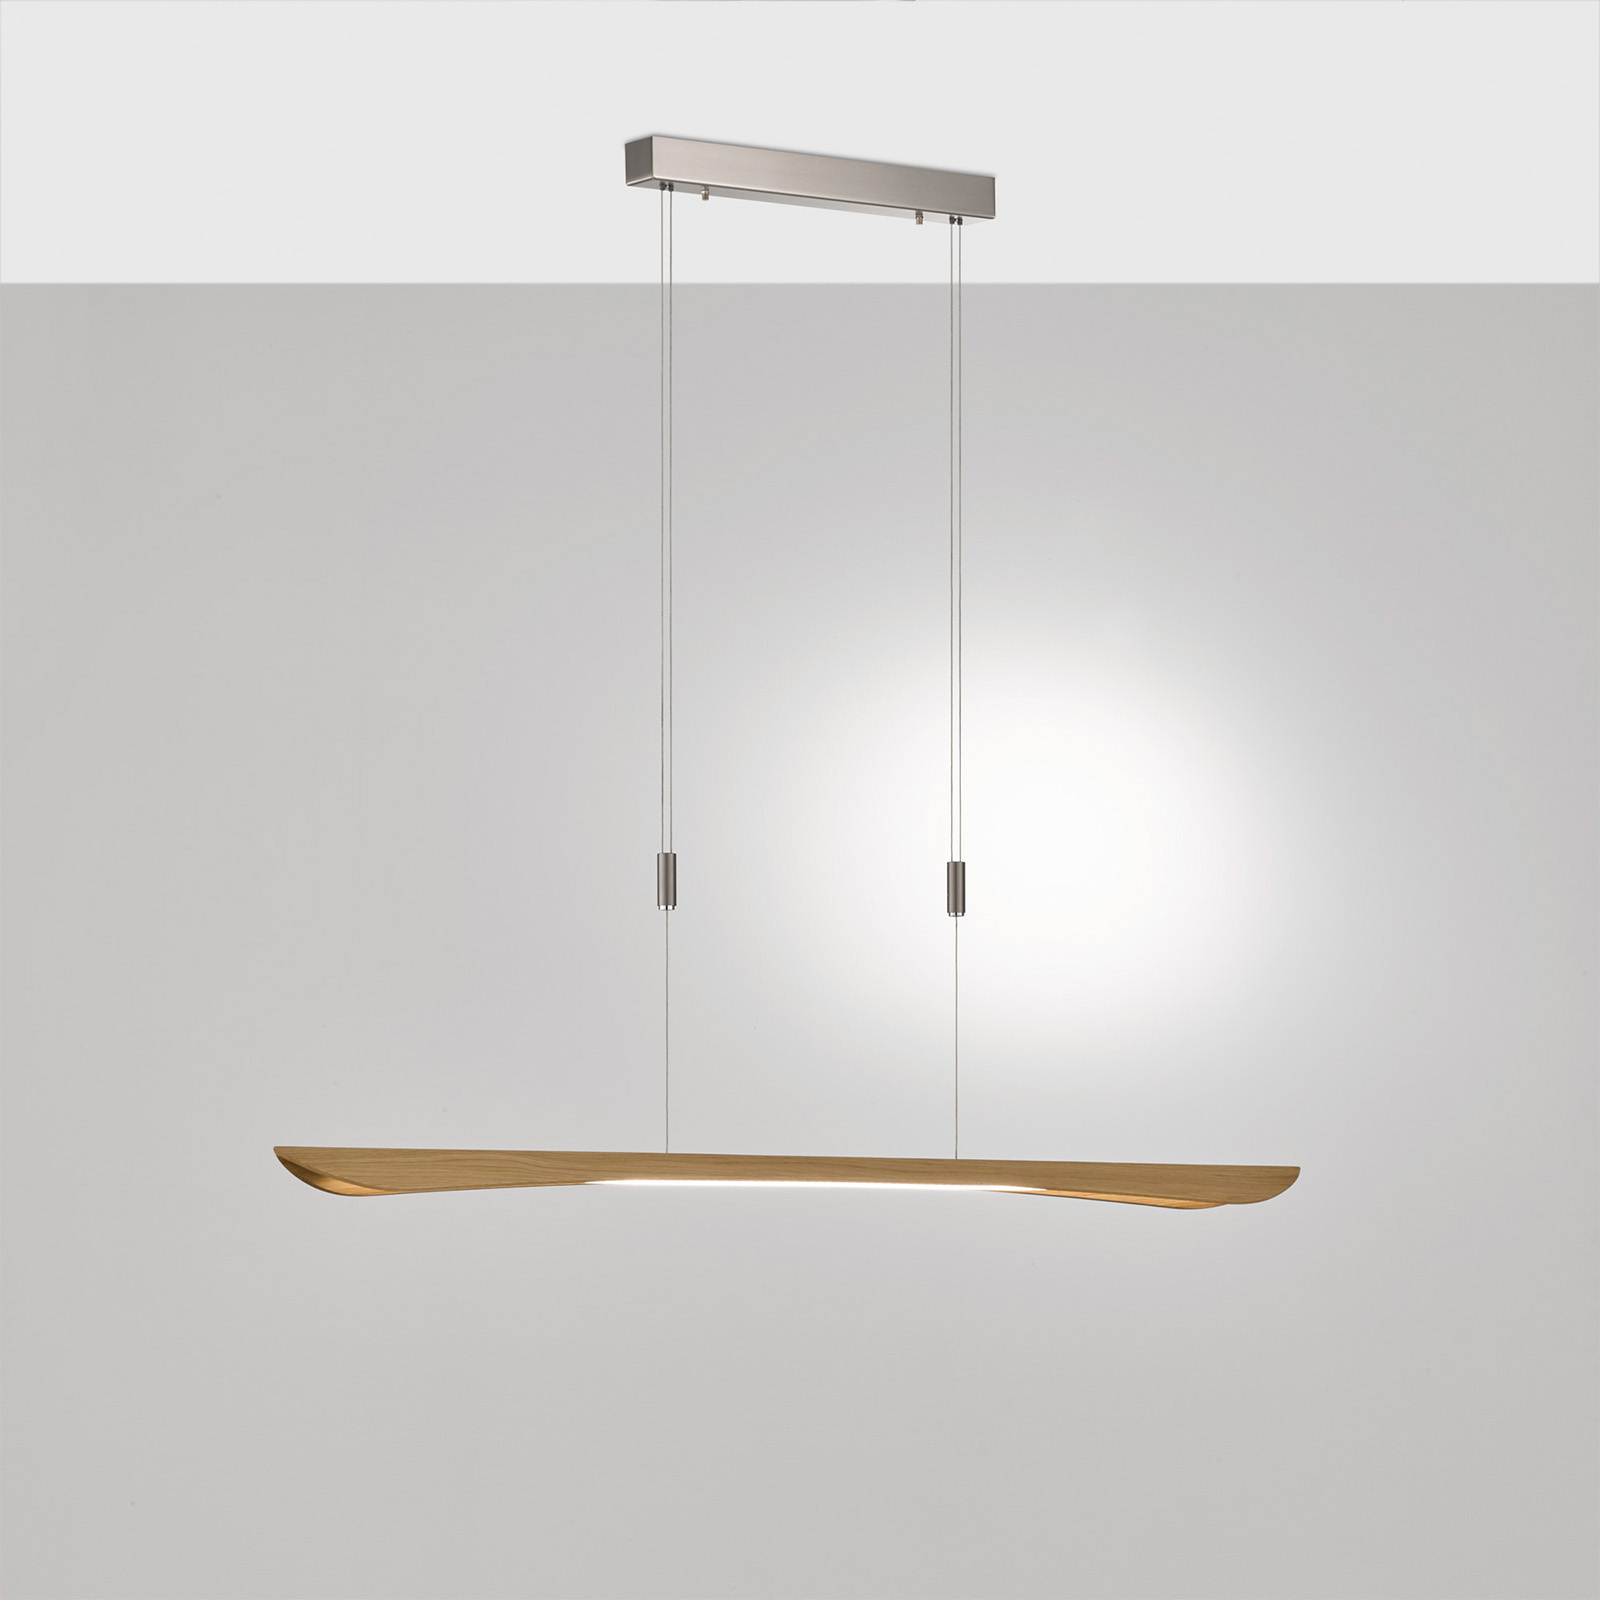 Rothfels Hiba LED pendant light, oak, 148 cm